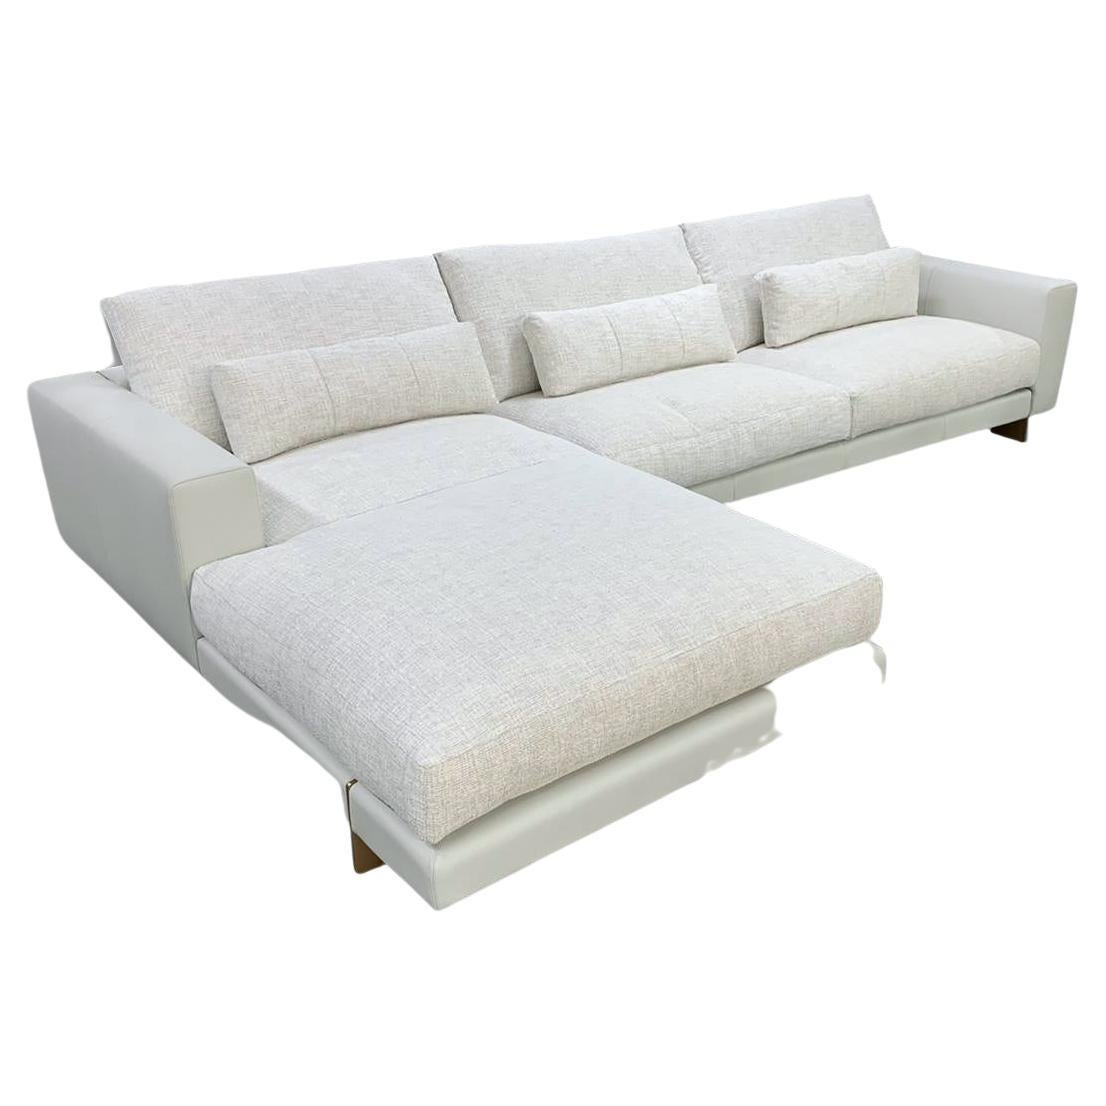 DIVO Sectional Contemporary Sofa For Sale